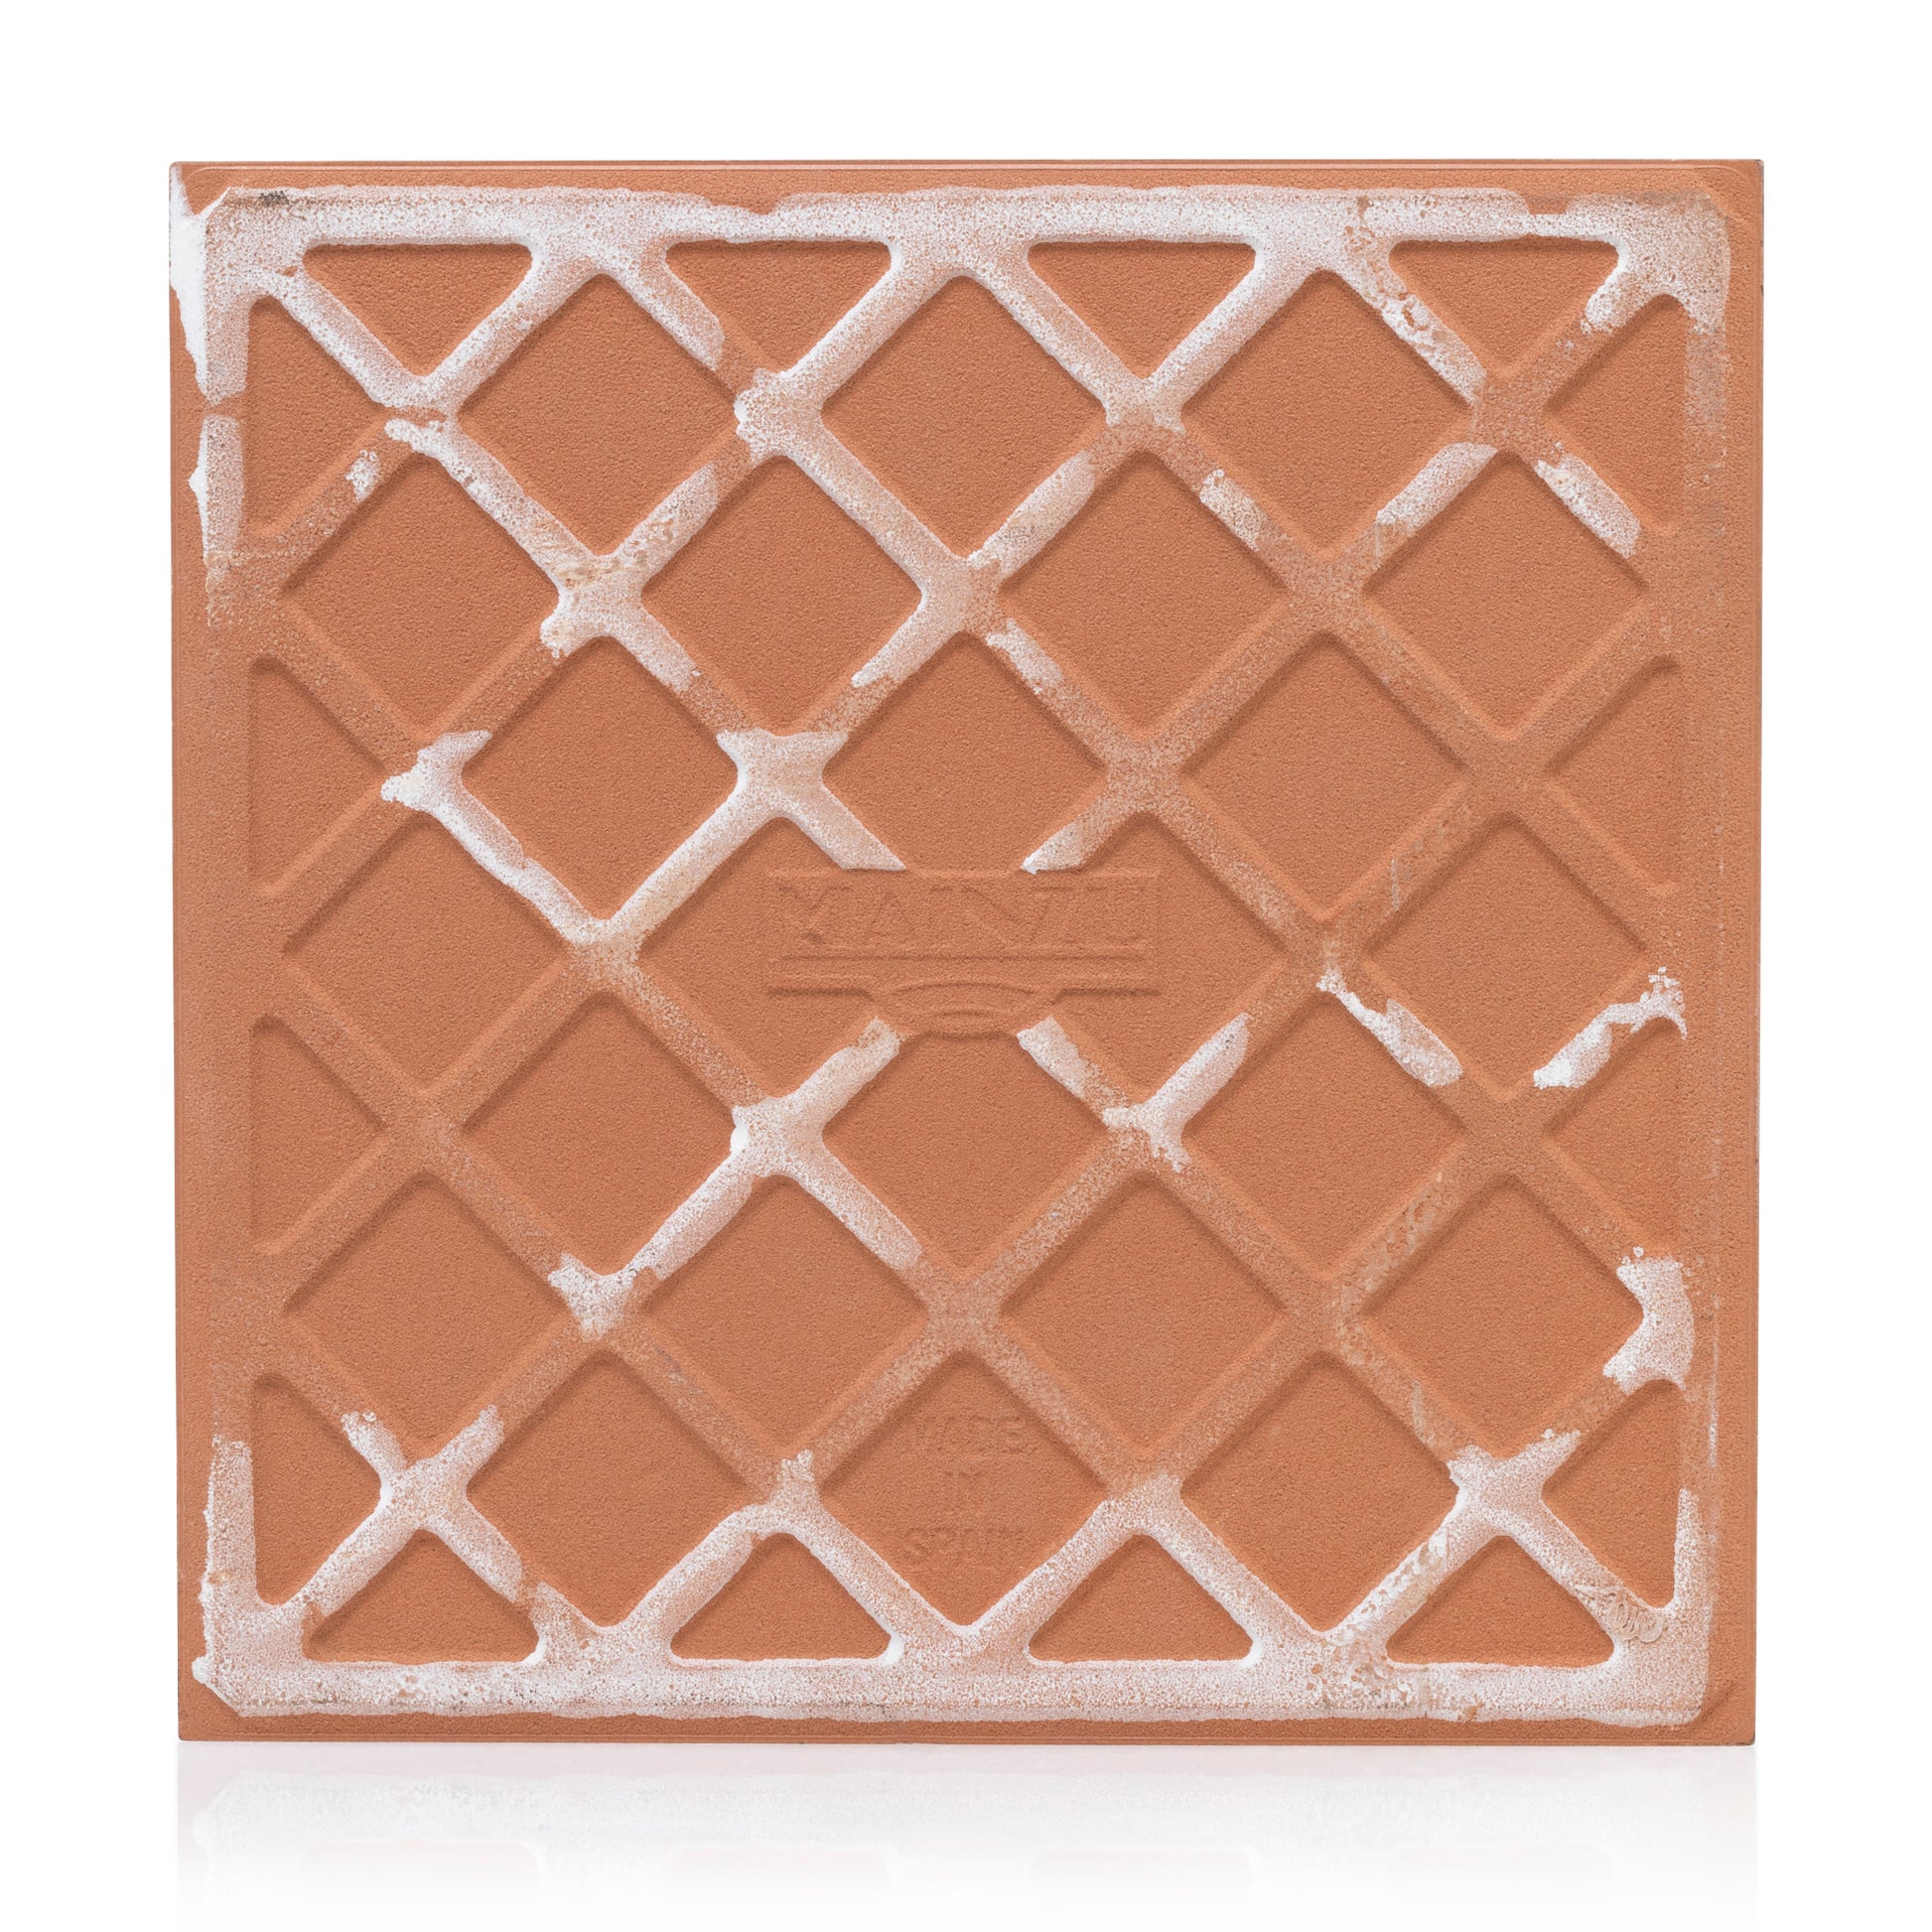 8x8 Tradition Budapest Ceramic Tile - Industry Tile